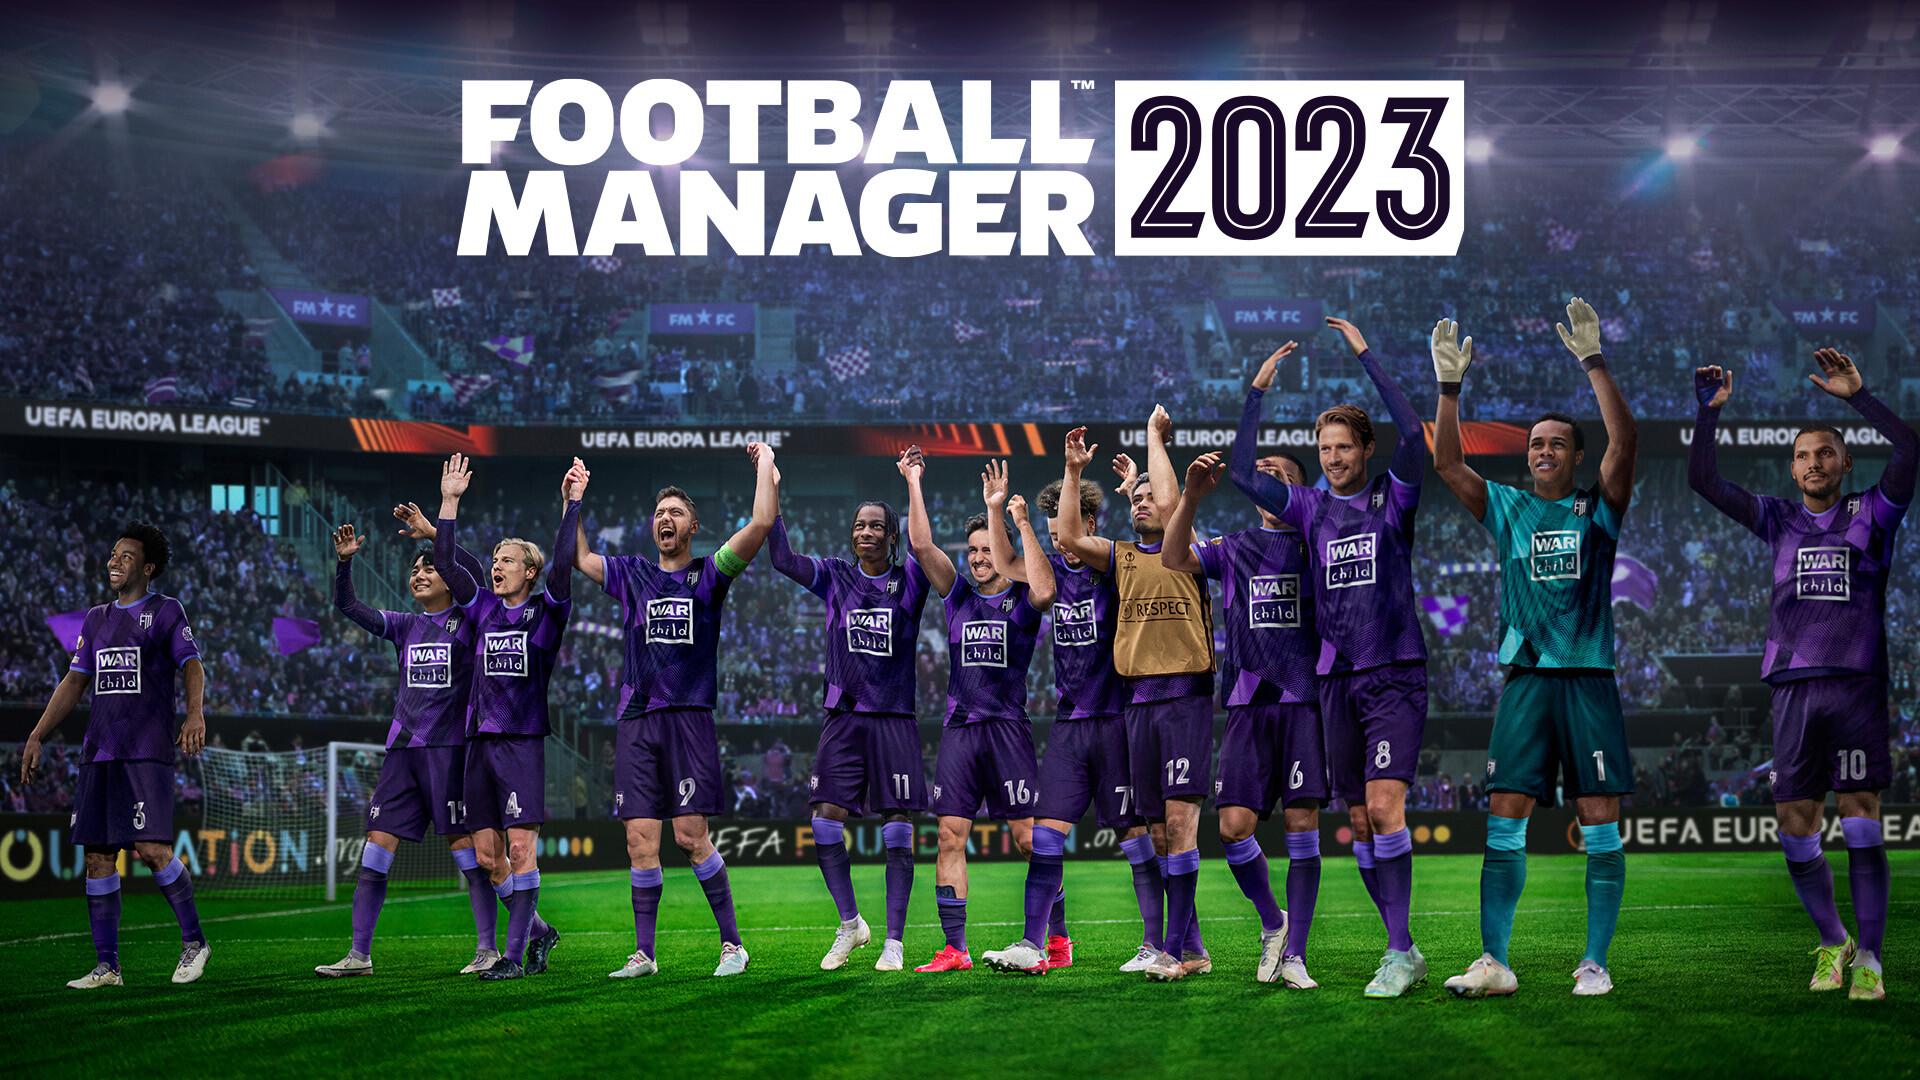 Football Manager 2022-2023 League Update Database  Feat Premier League 2022/2023  •